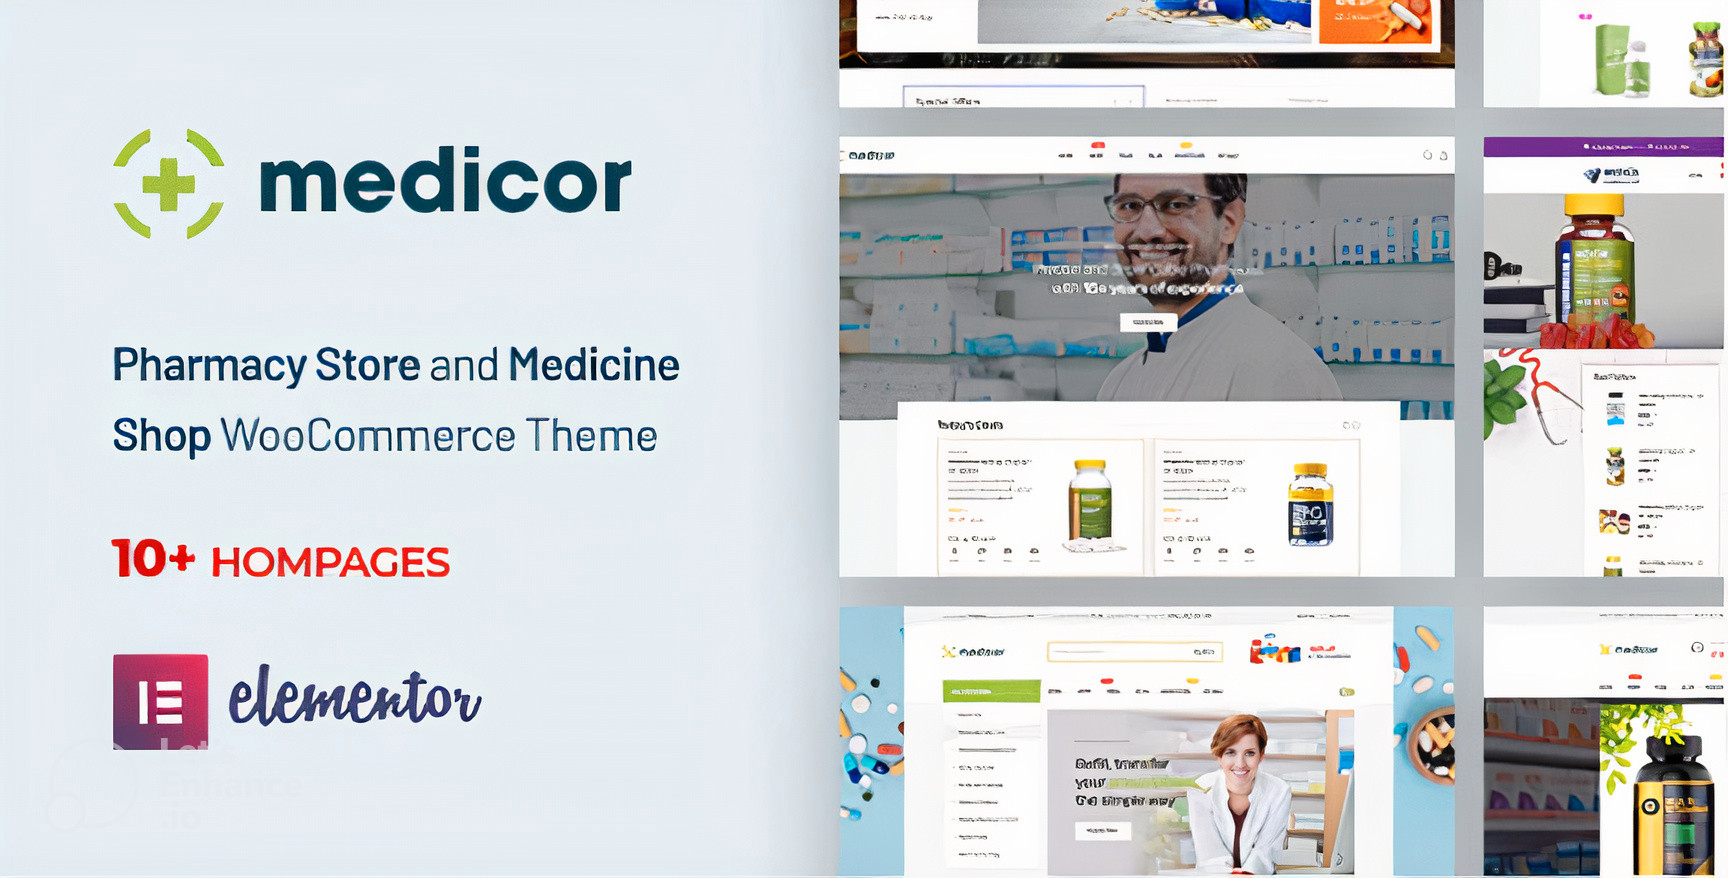 Medicor best selling wordpress themes